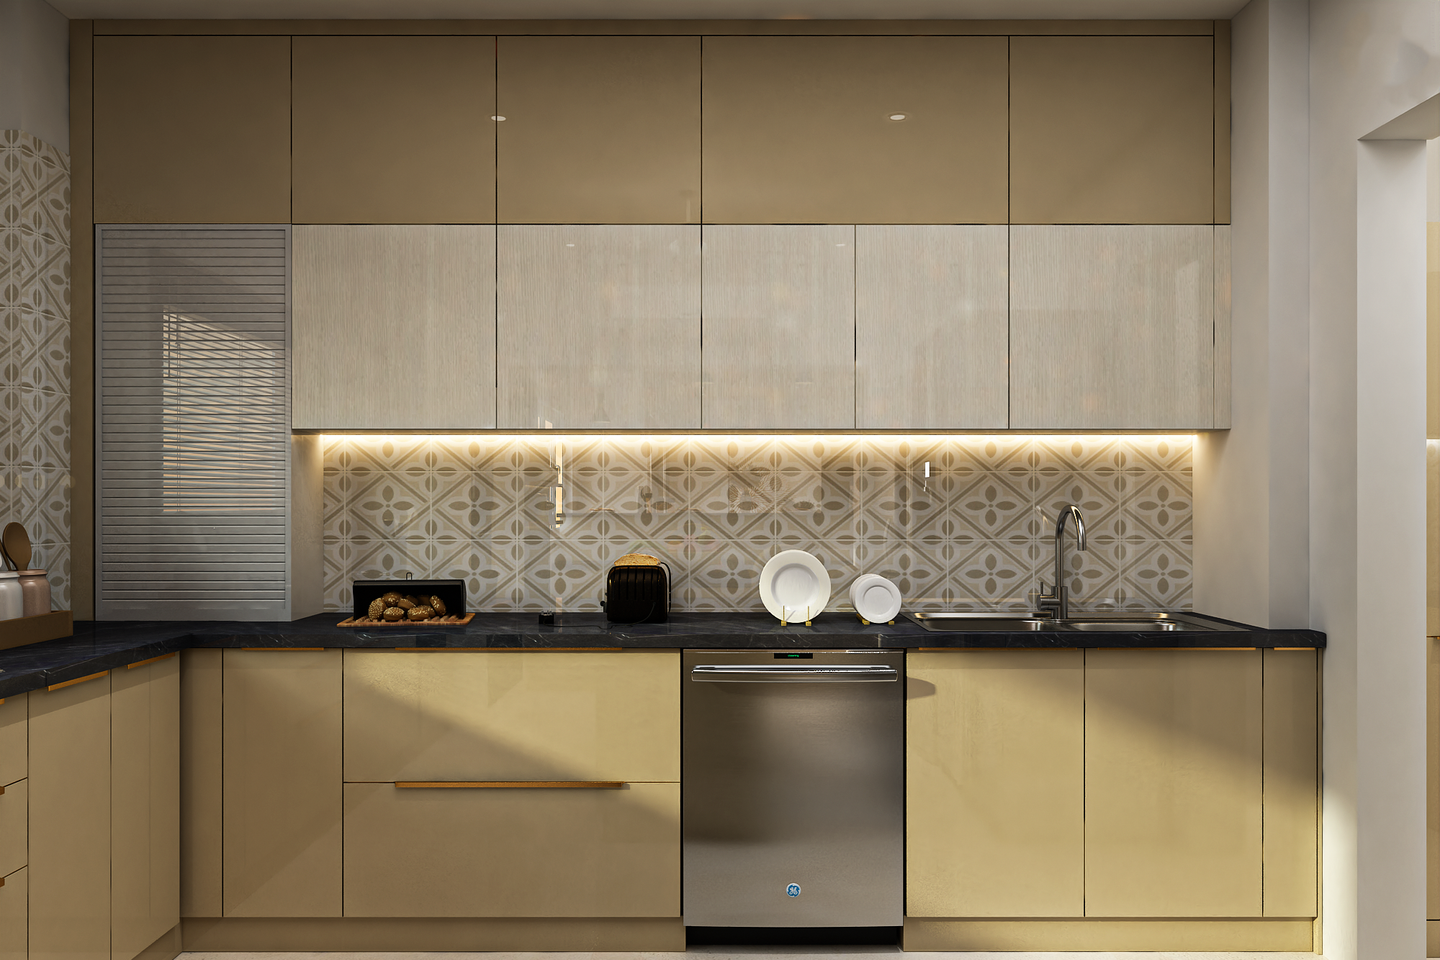 Contemporary Kitchen Design With Cove Lights - Livspace